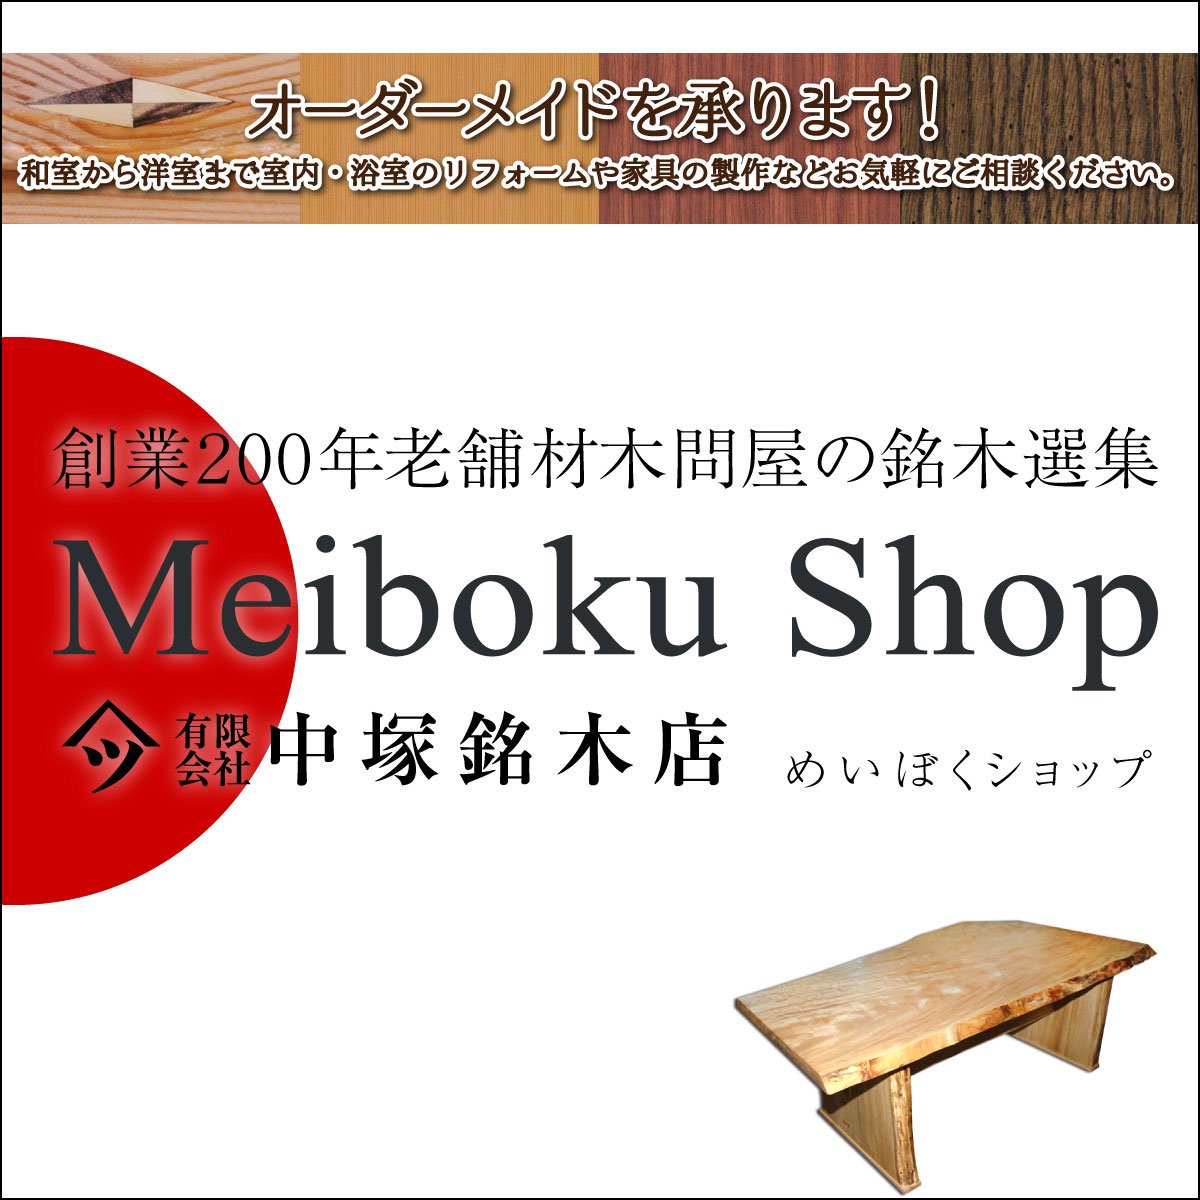 E-34 トチ - トチ（栃） - 中塚銘木店「Meiboku Shop」創業200年老舗材木問屋の銘木選集